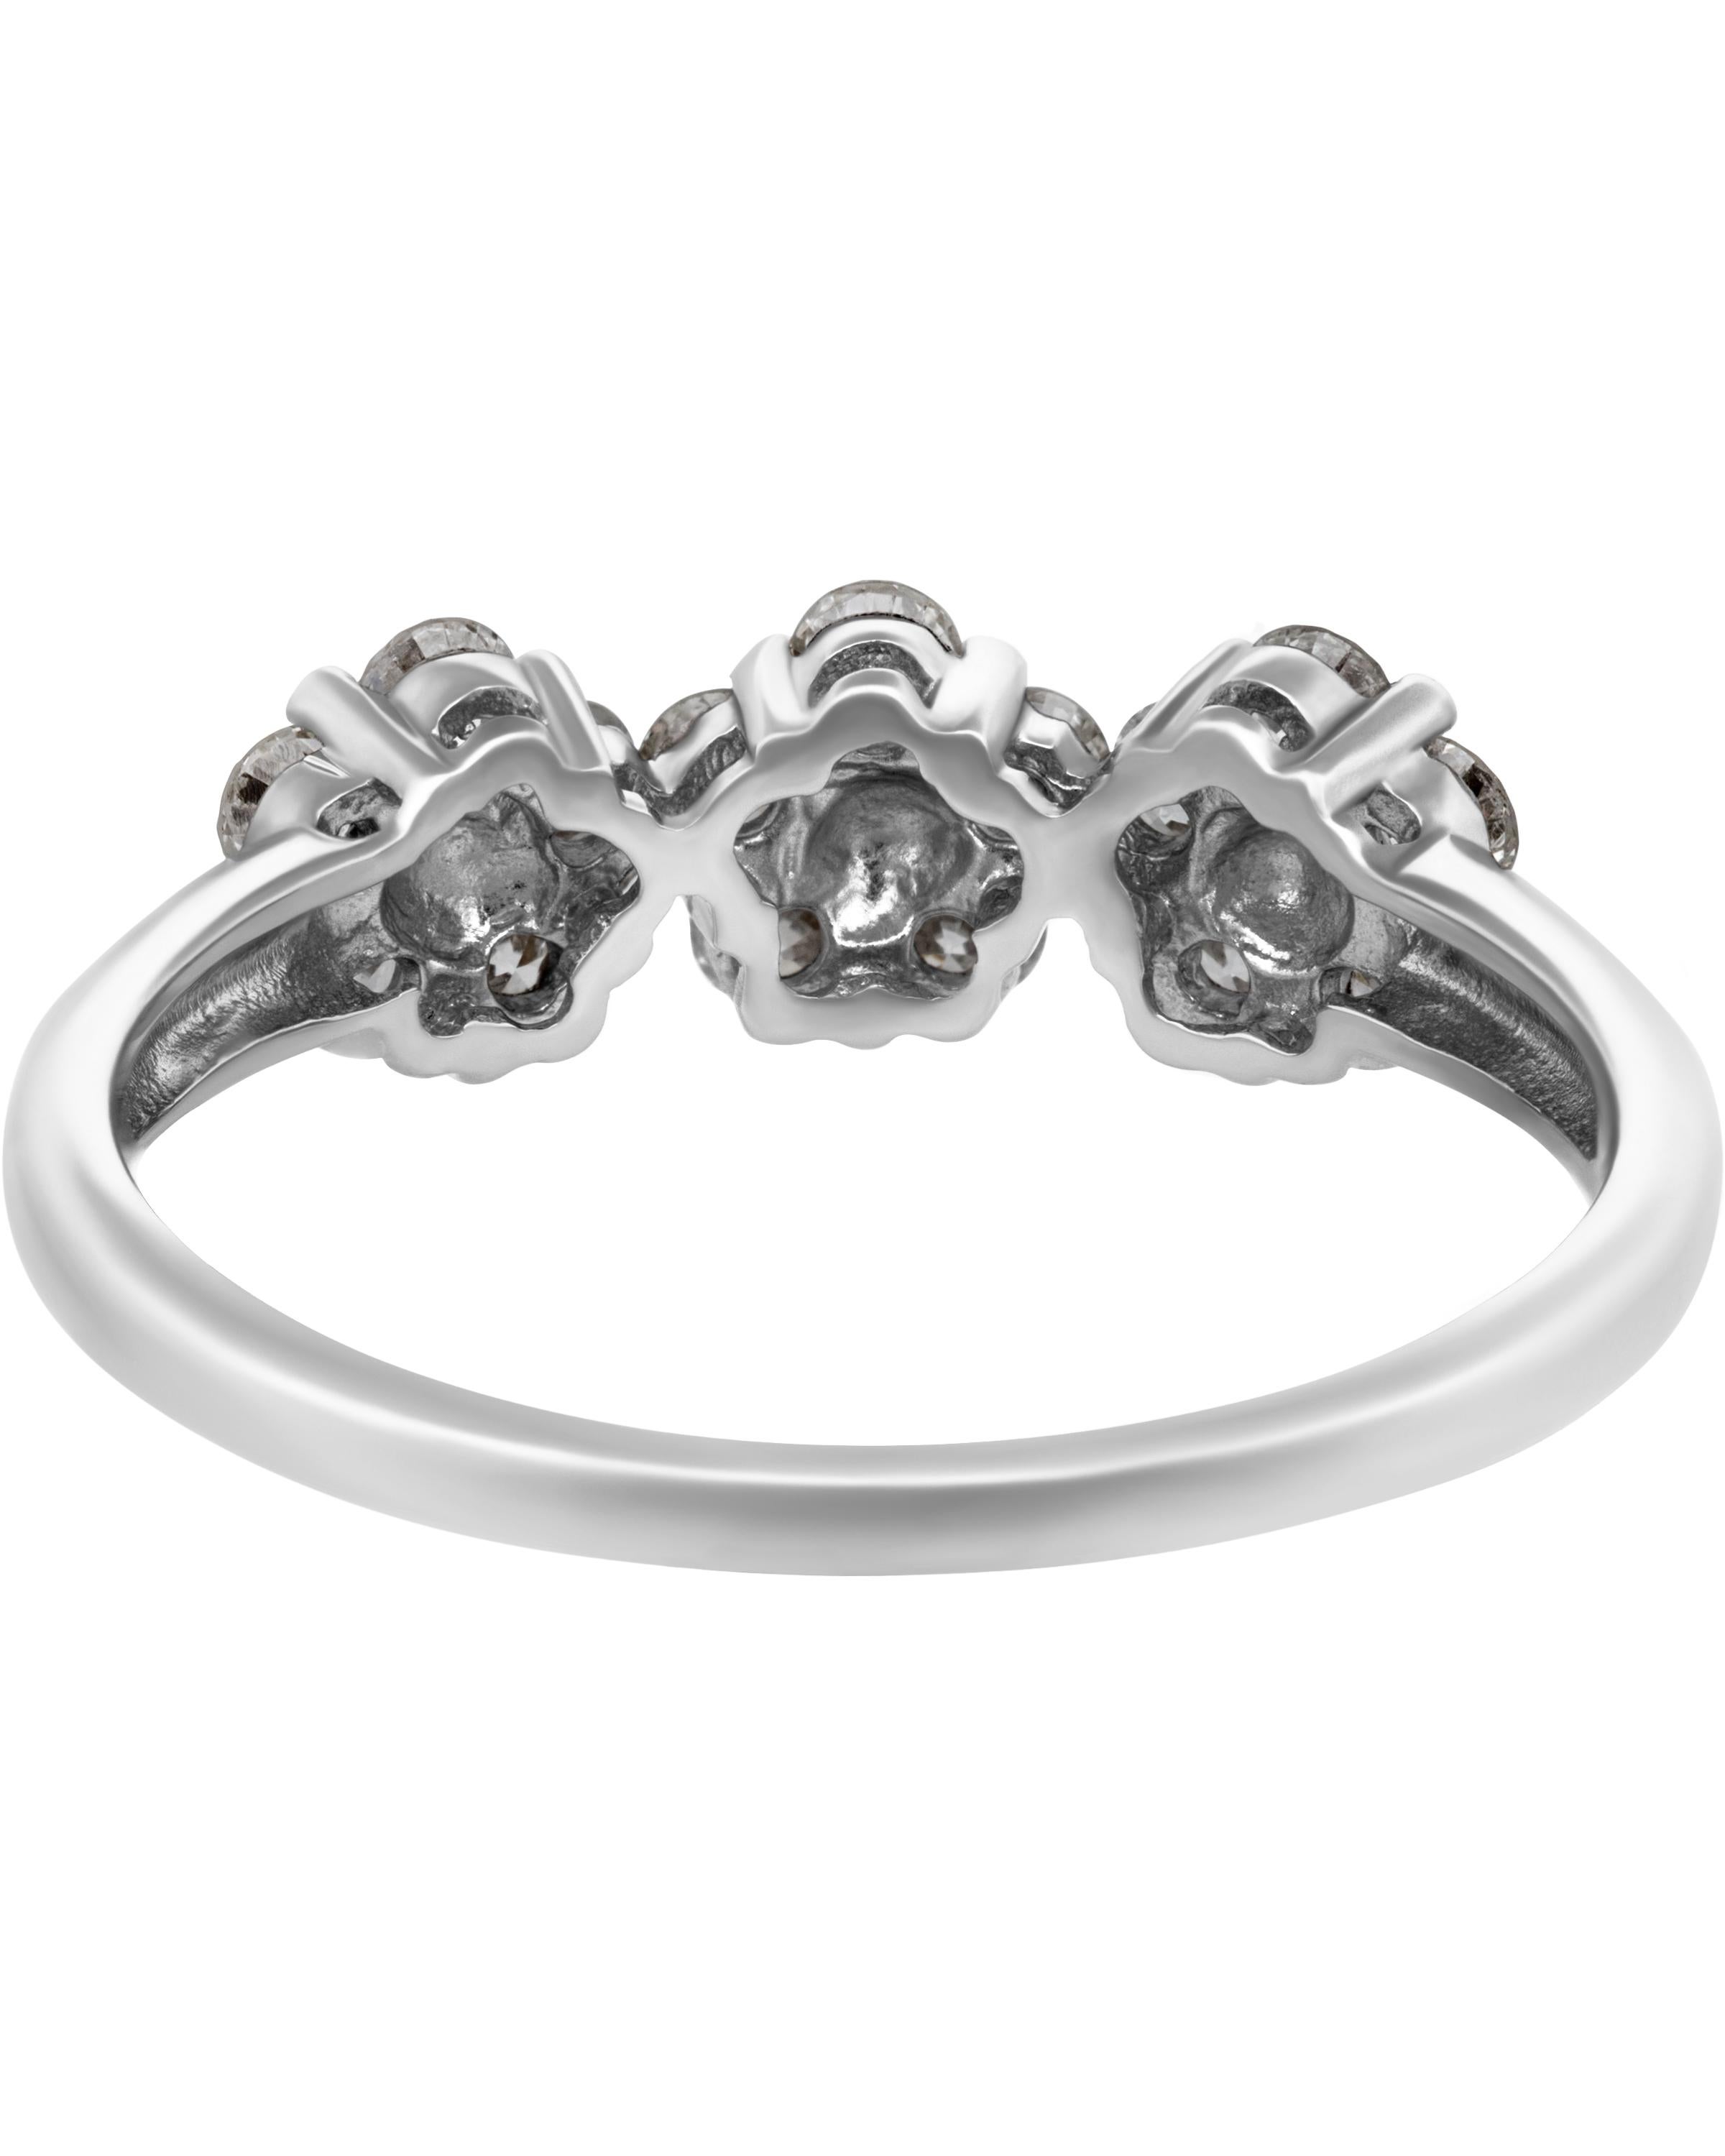 Contemporary Piero Milano 18K White Gold Diamond Ring Sz 6.75 For Sale